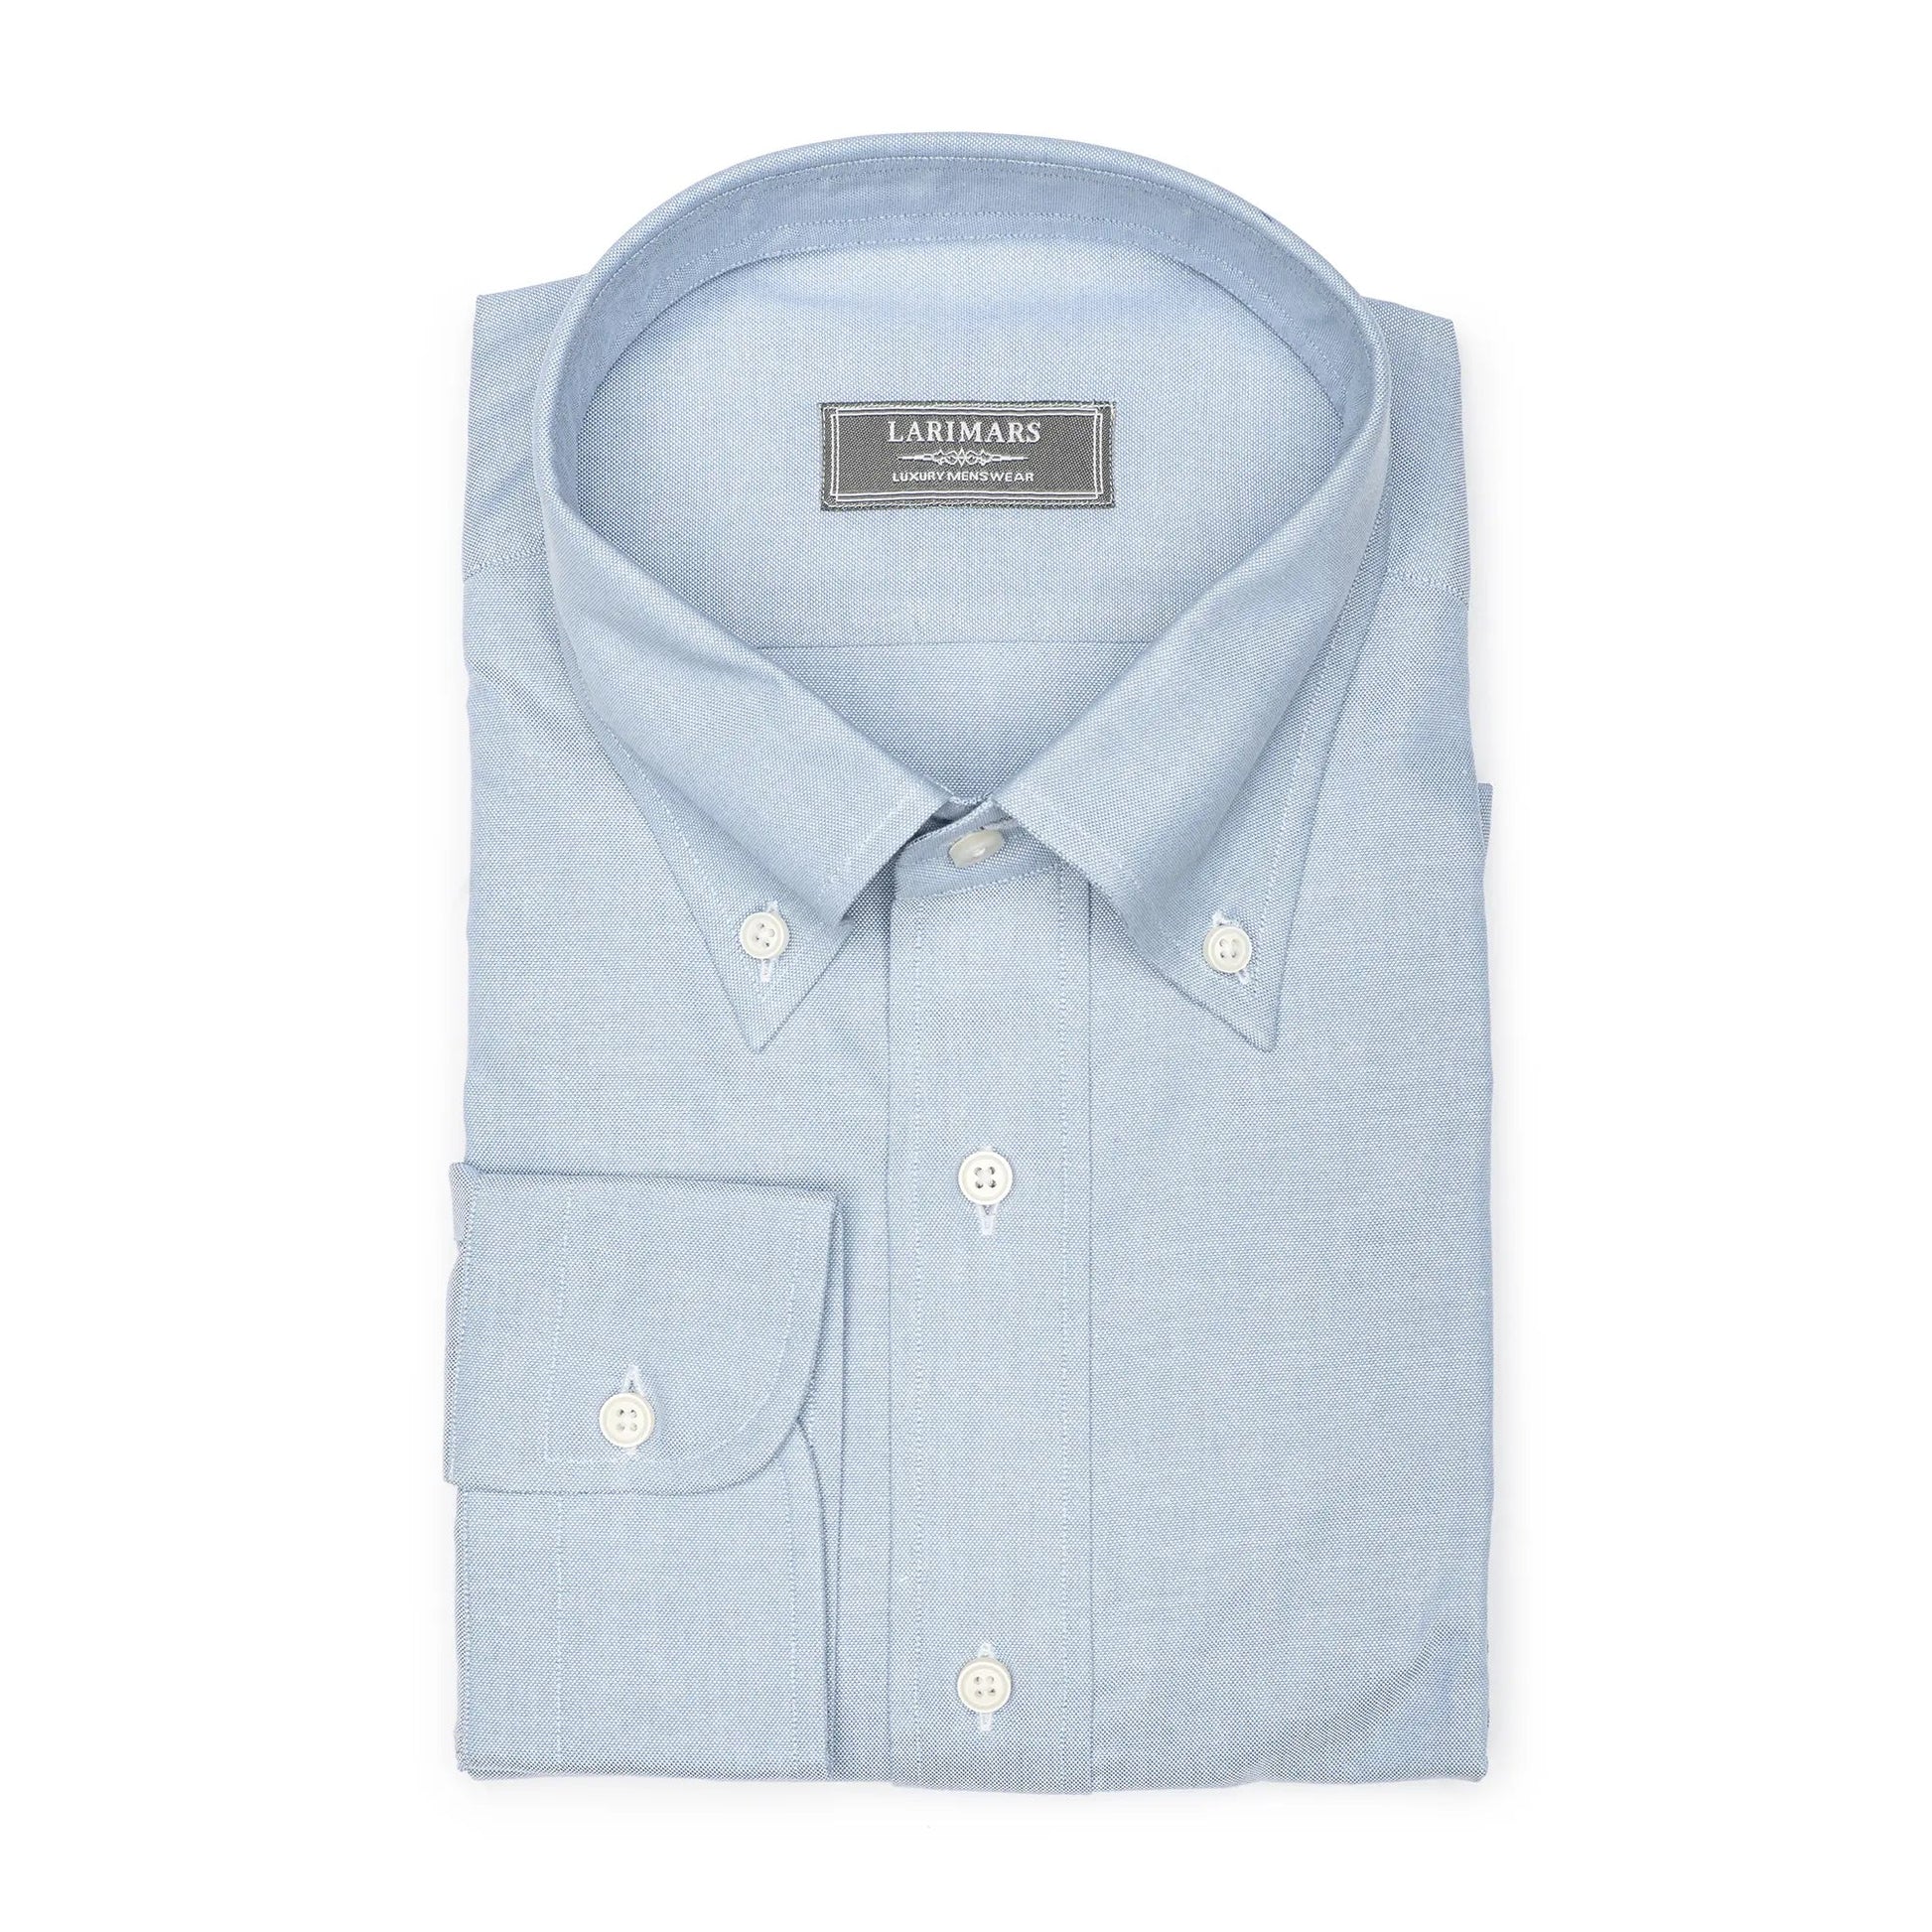 Medium Blue Oxford - Larimars Clothing Men's Formal and casual wear shirts